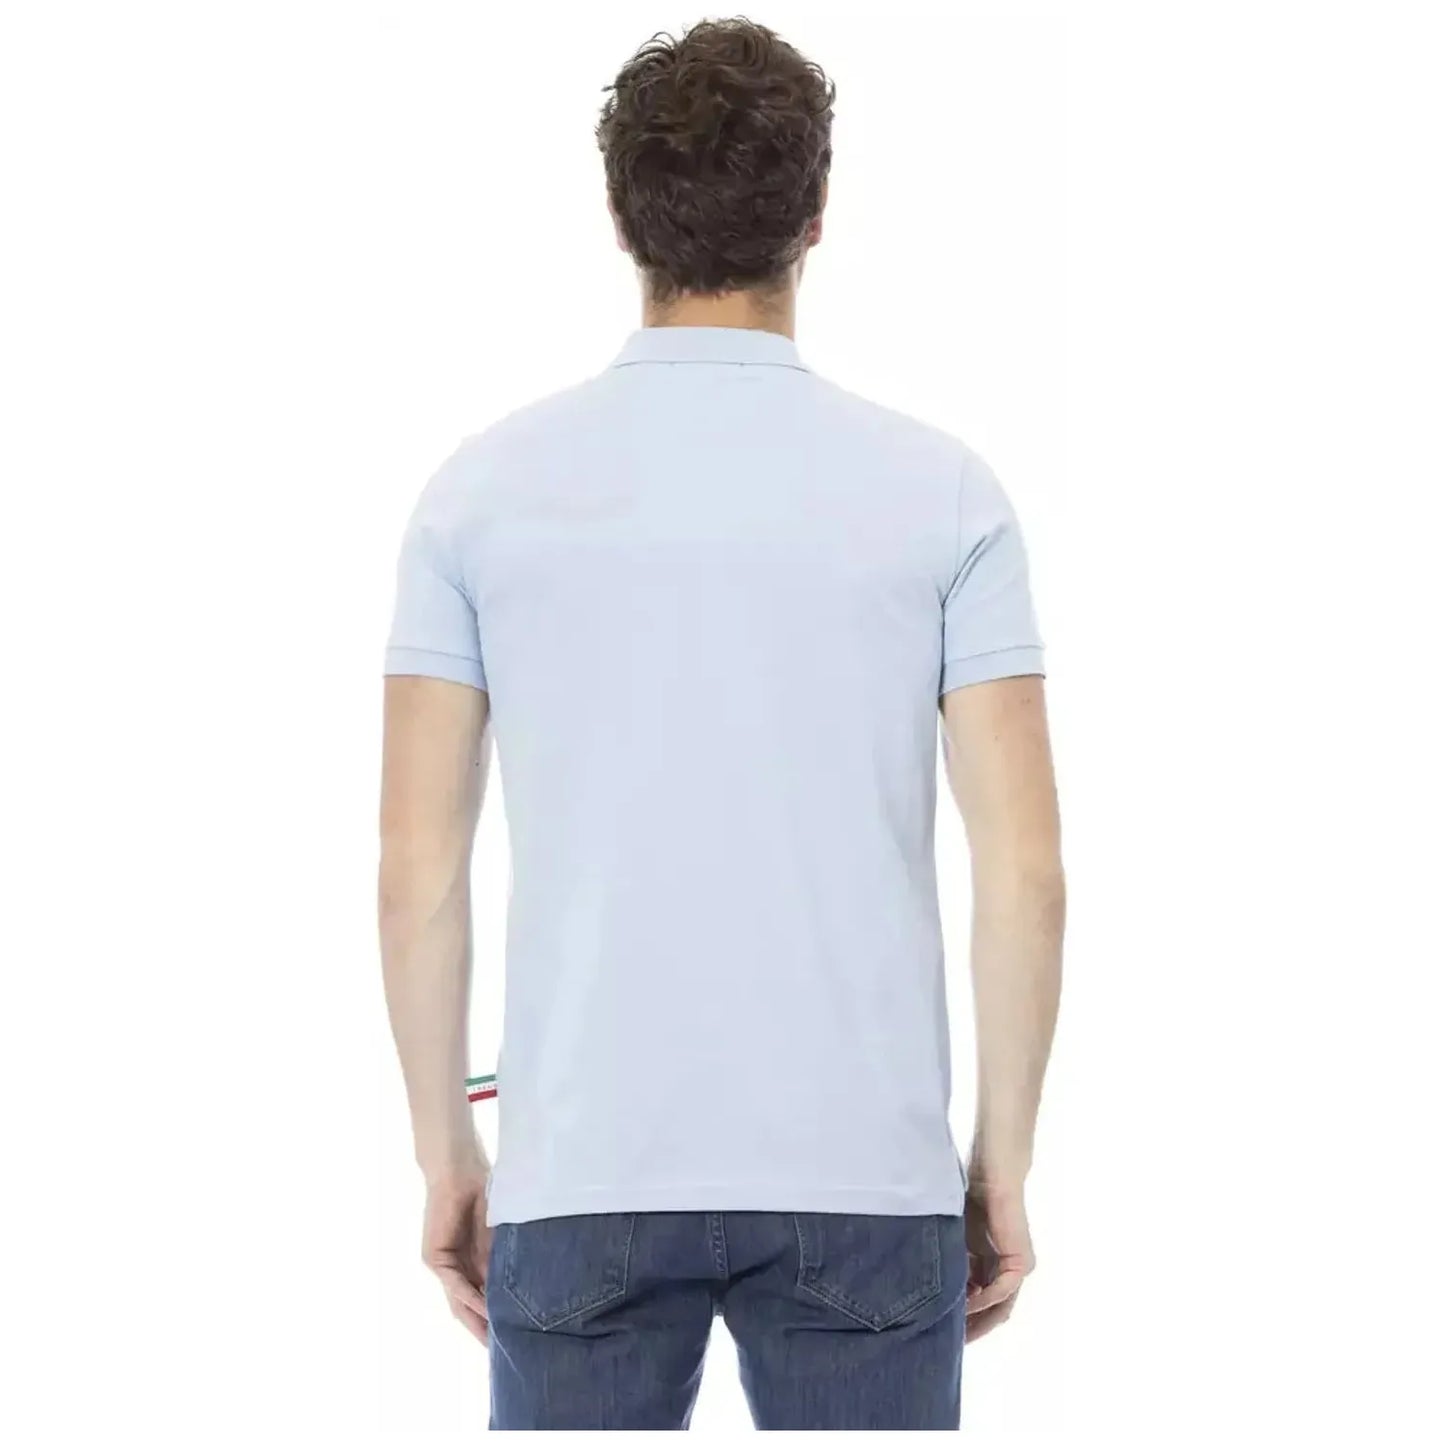 Baldinini Trend Elegant Light Blue Cotton Polo Shirt light-blue-cotton-polo-shirt-4